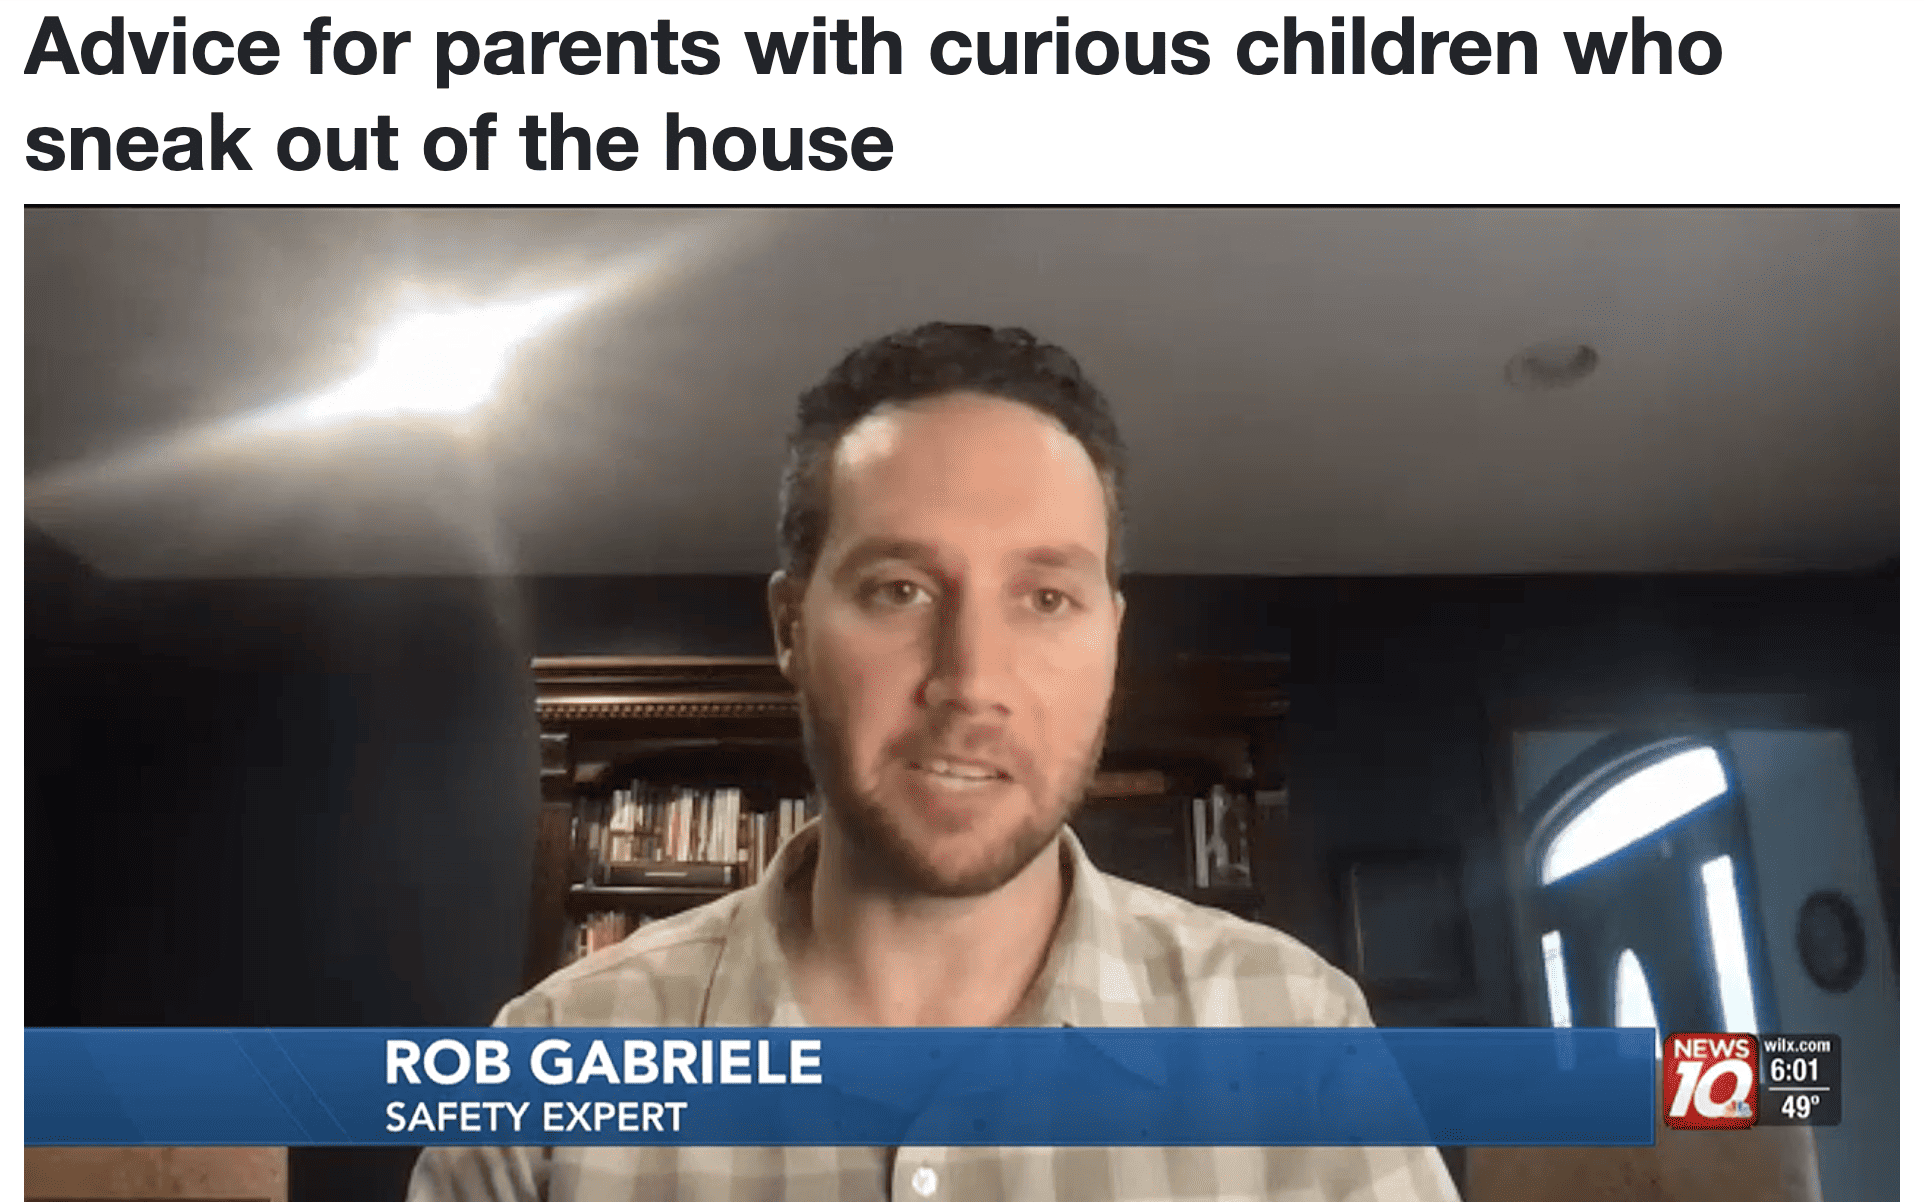 Rob Gabriele on WILX Channel 10 News